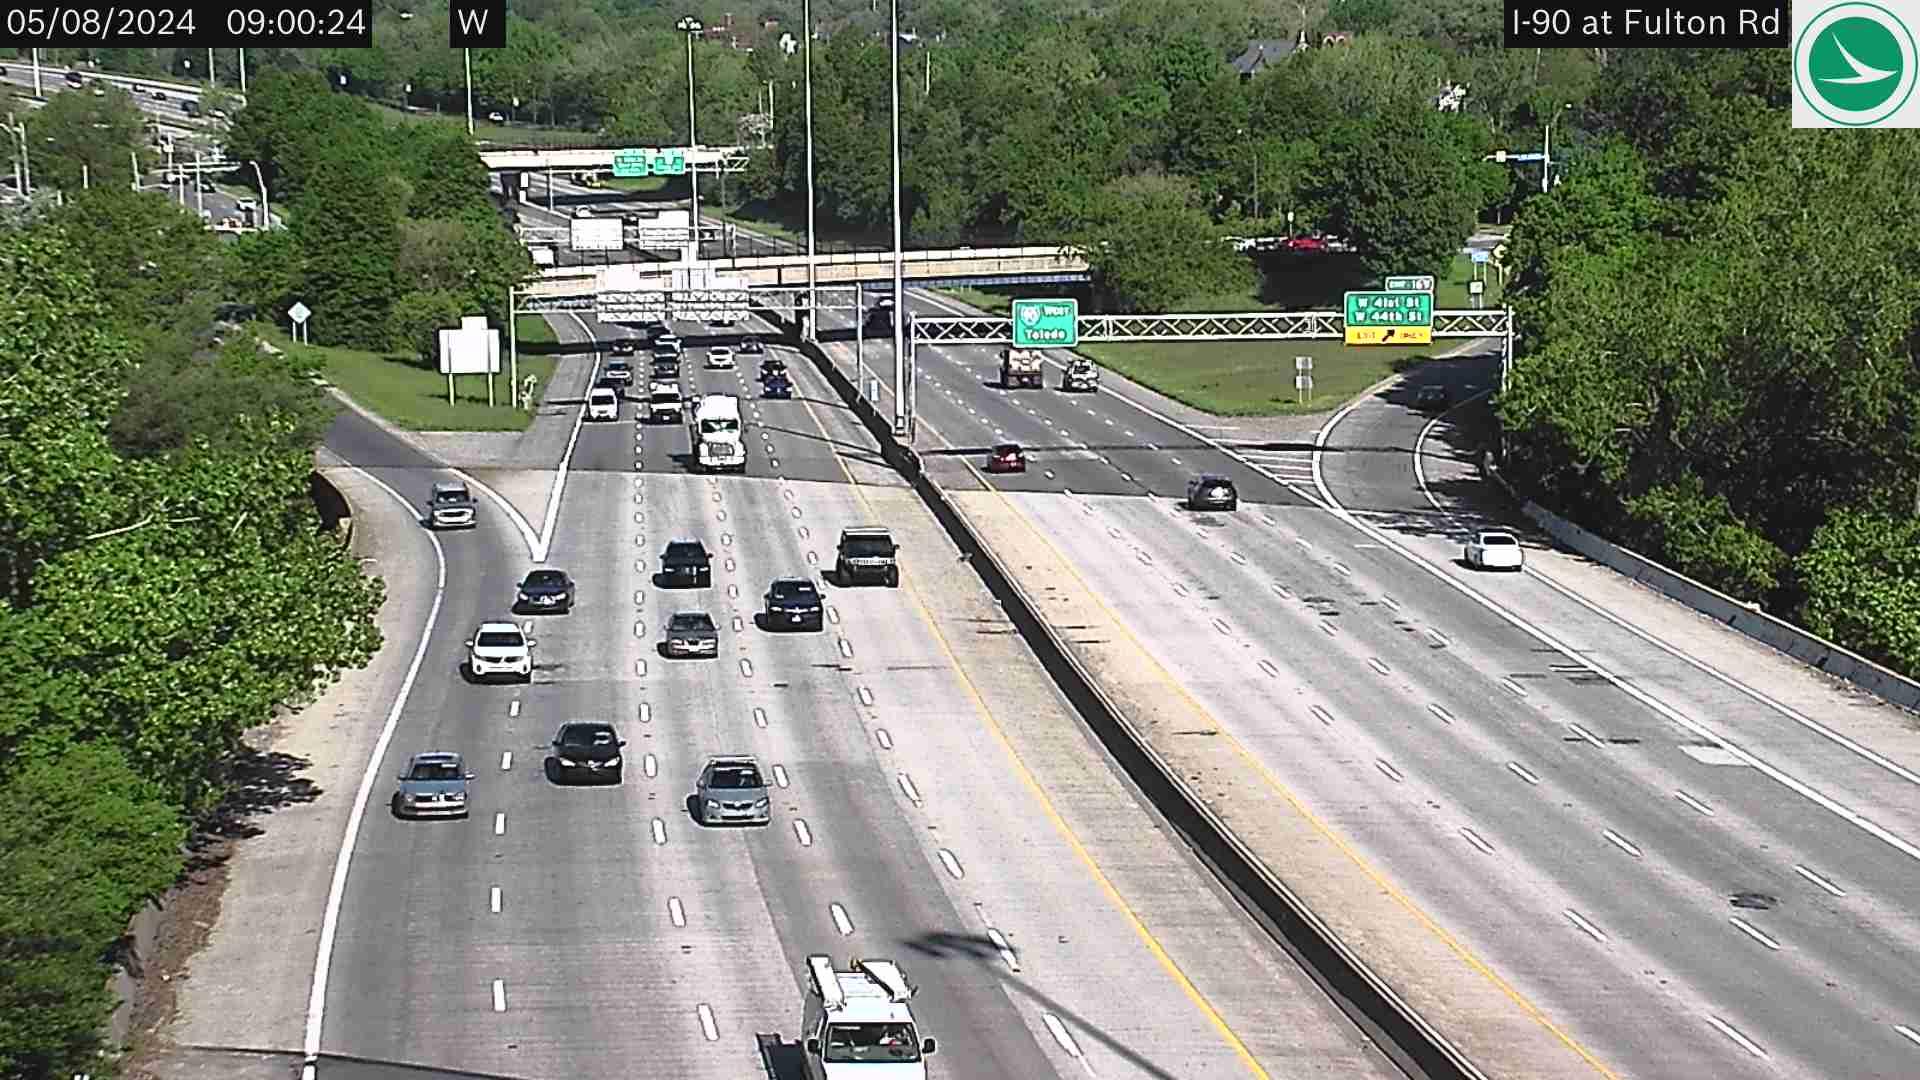 Traffic Cam Ohio City: I-90 at Fulton Rd Player